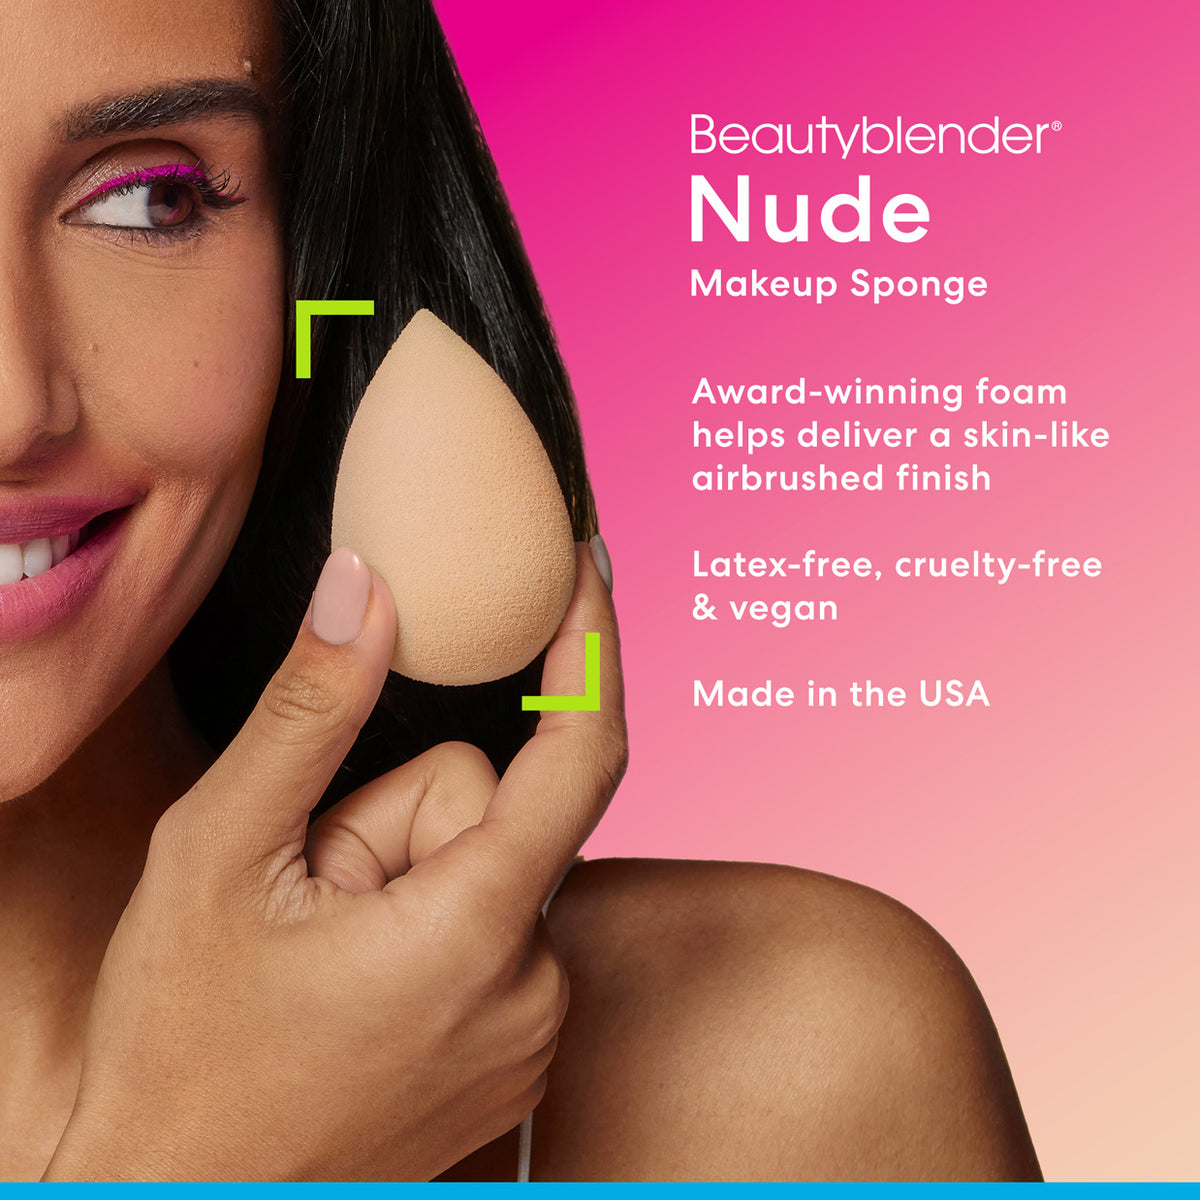 Beautyblender® Nude Makeup Sponge.